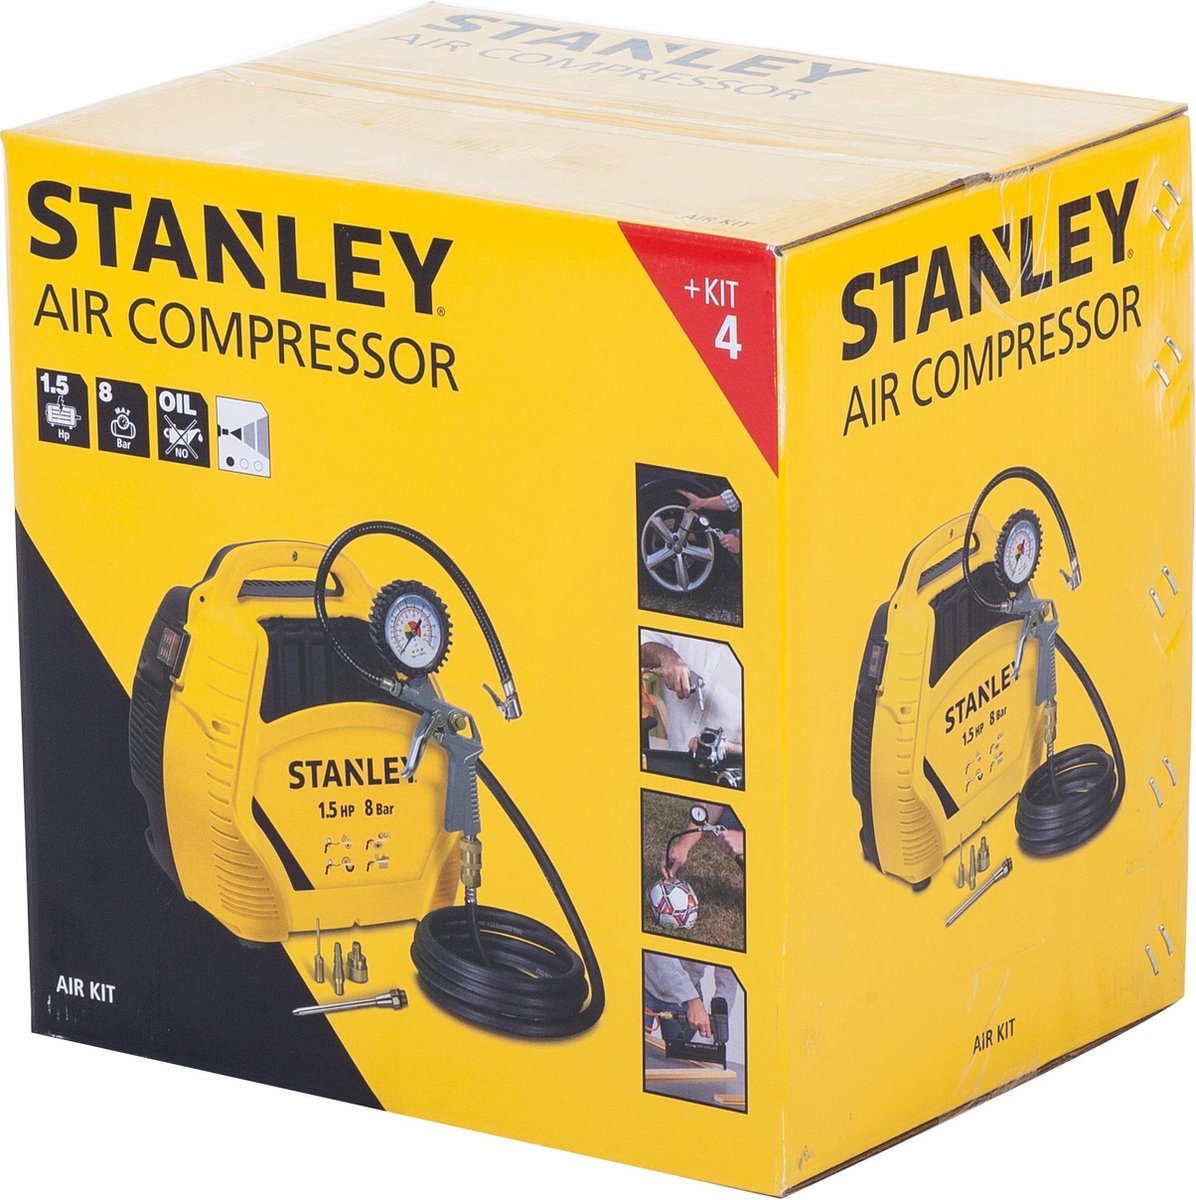 Stanley AIR KIT Compressor - 8 bar